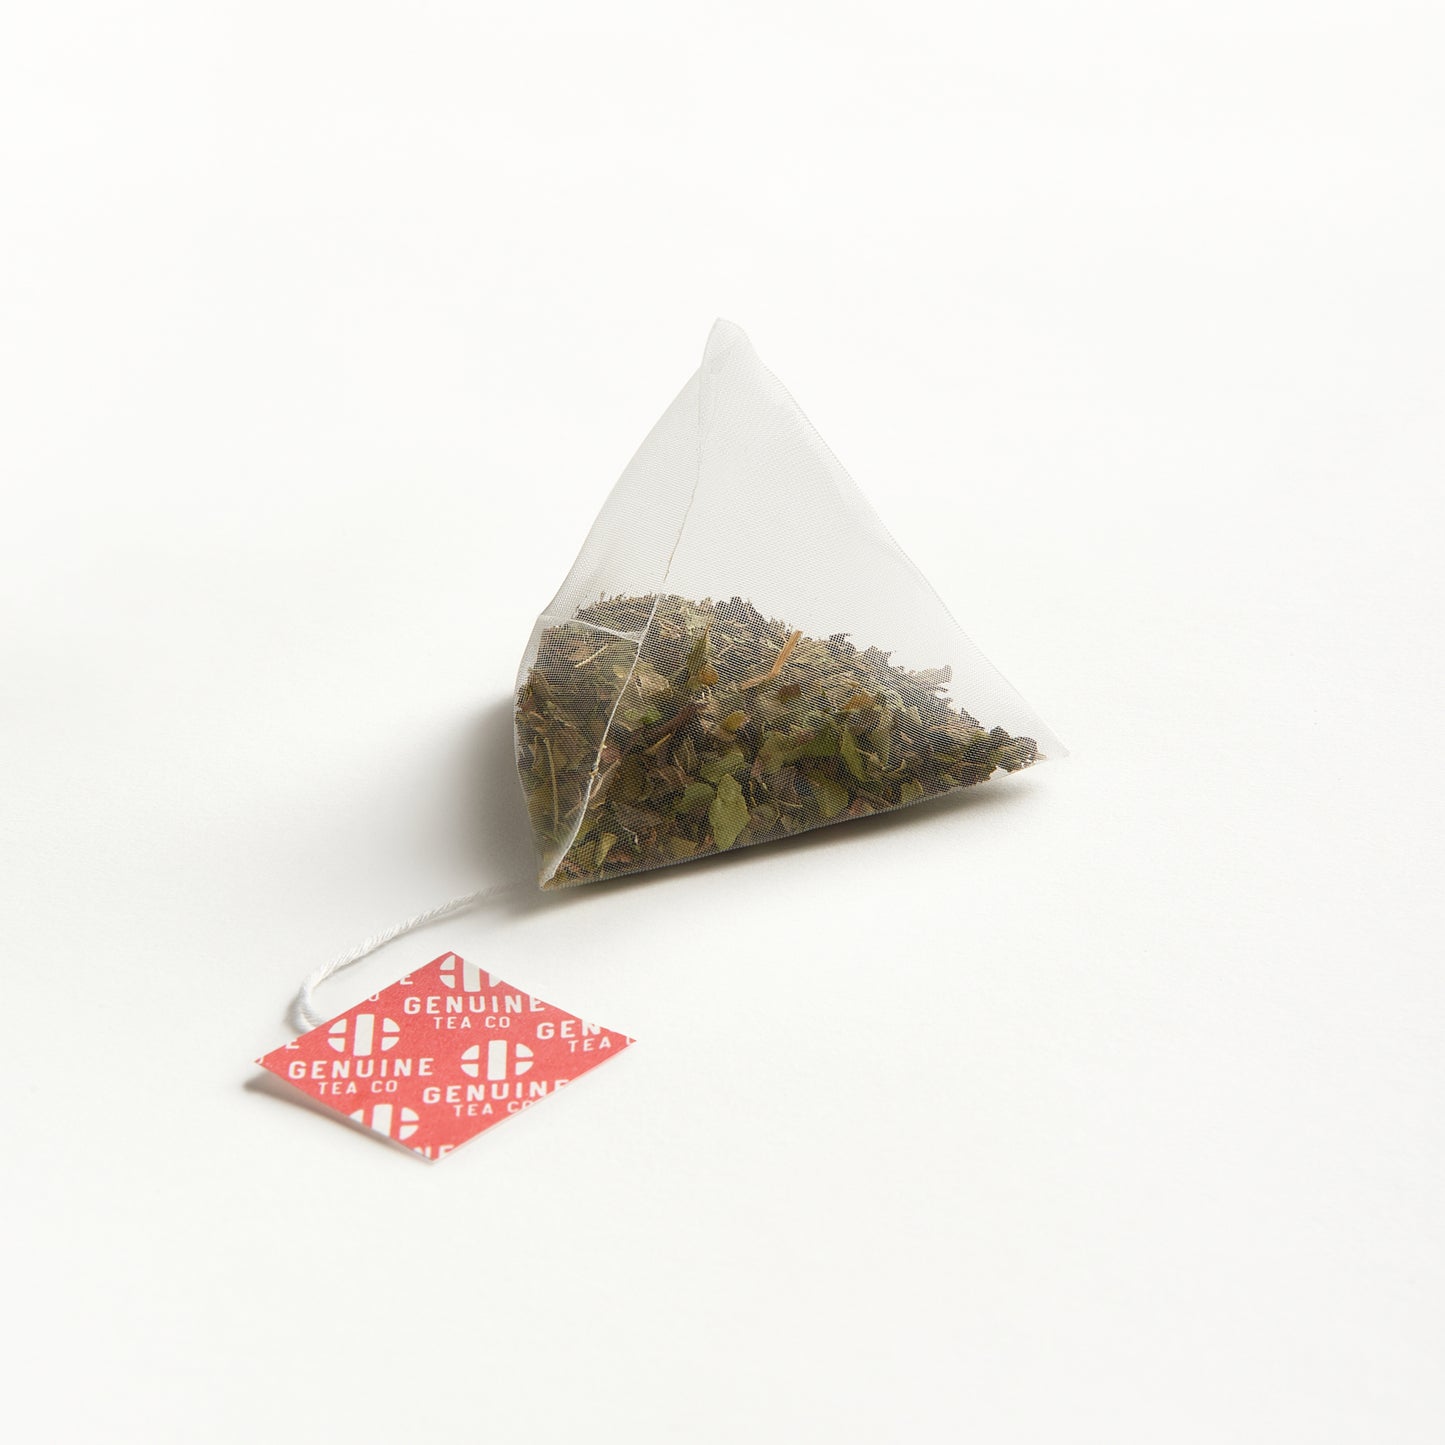 Organic Moringa Mint Biodegradable Plant-based Pyramid Tea Bags Looseleaf Toronto Canada